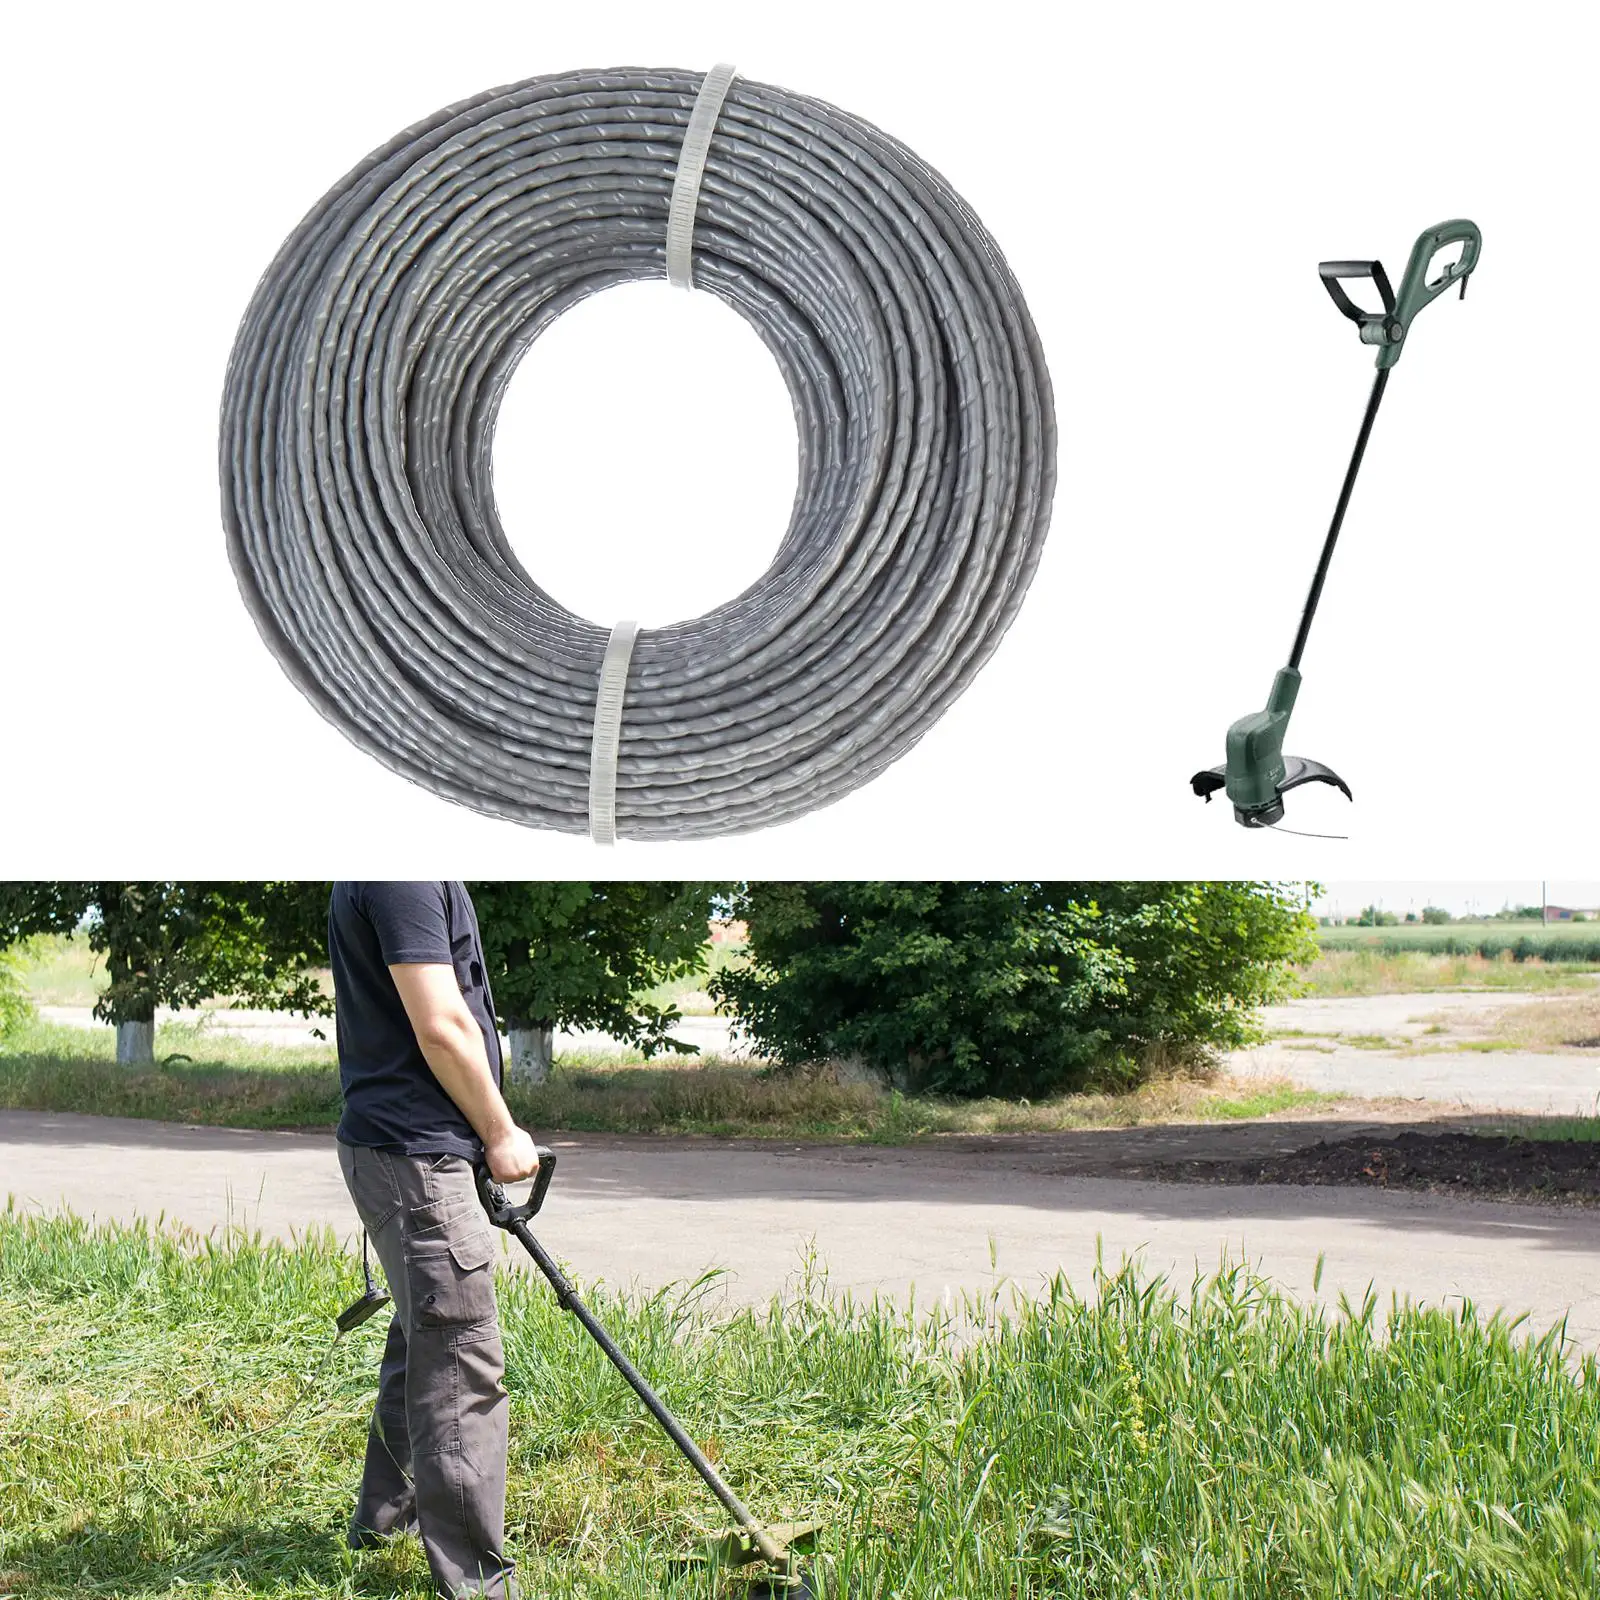 

Strimmer Trimmer Line Spool For BOSCH ART 24 27 30 36 Li 24m 1.65mm F016800462 TRIMMER LINE Garden Power Tool Parts Grass Rope